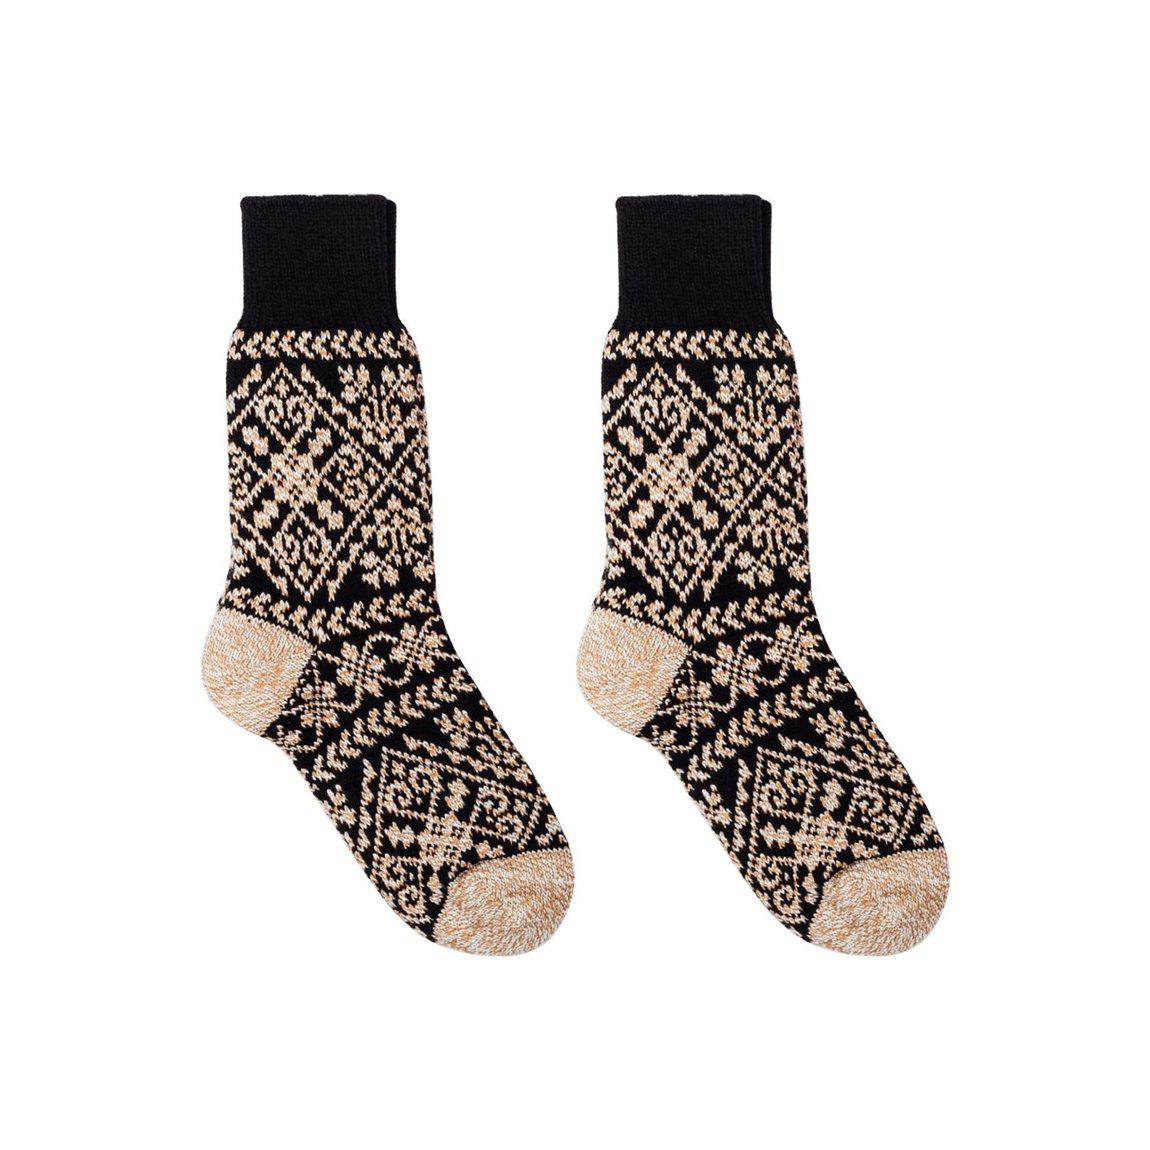 Nordic Socks Soft COZY™  Warm (Zelta - Black)  - Unisex